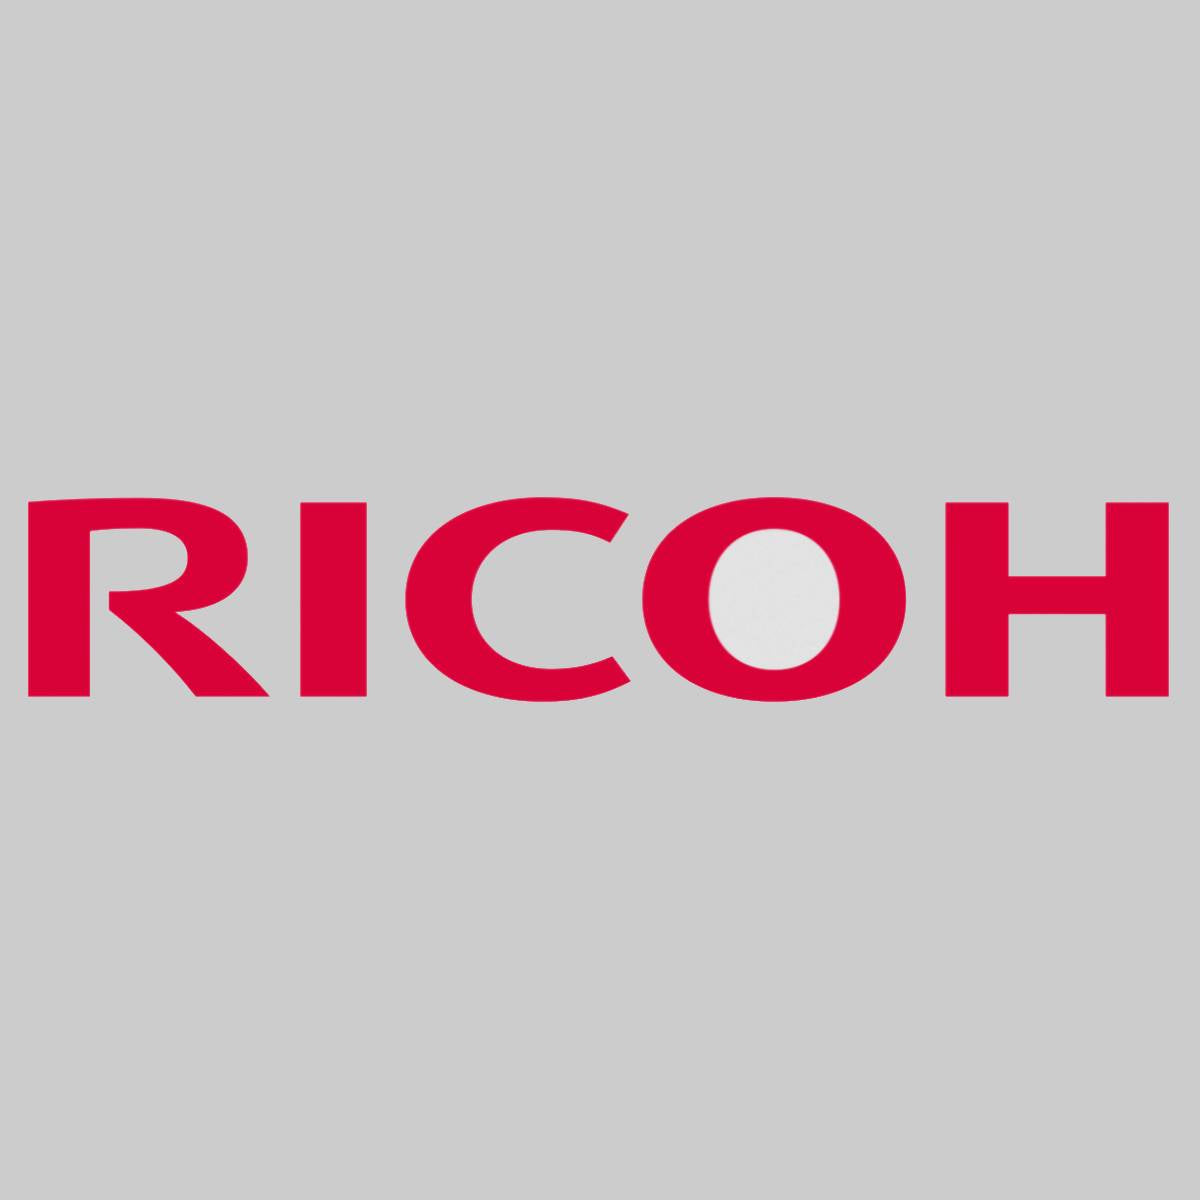 "Original Ricoh Coating Bar D179-3635 for Ricoh Pro 8100 8110 8120 NEW OVP^